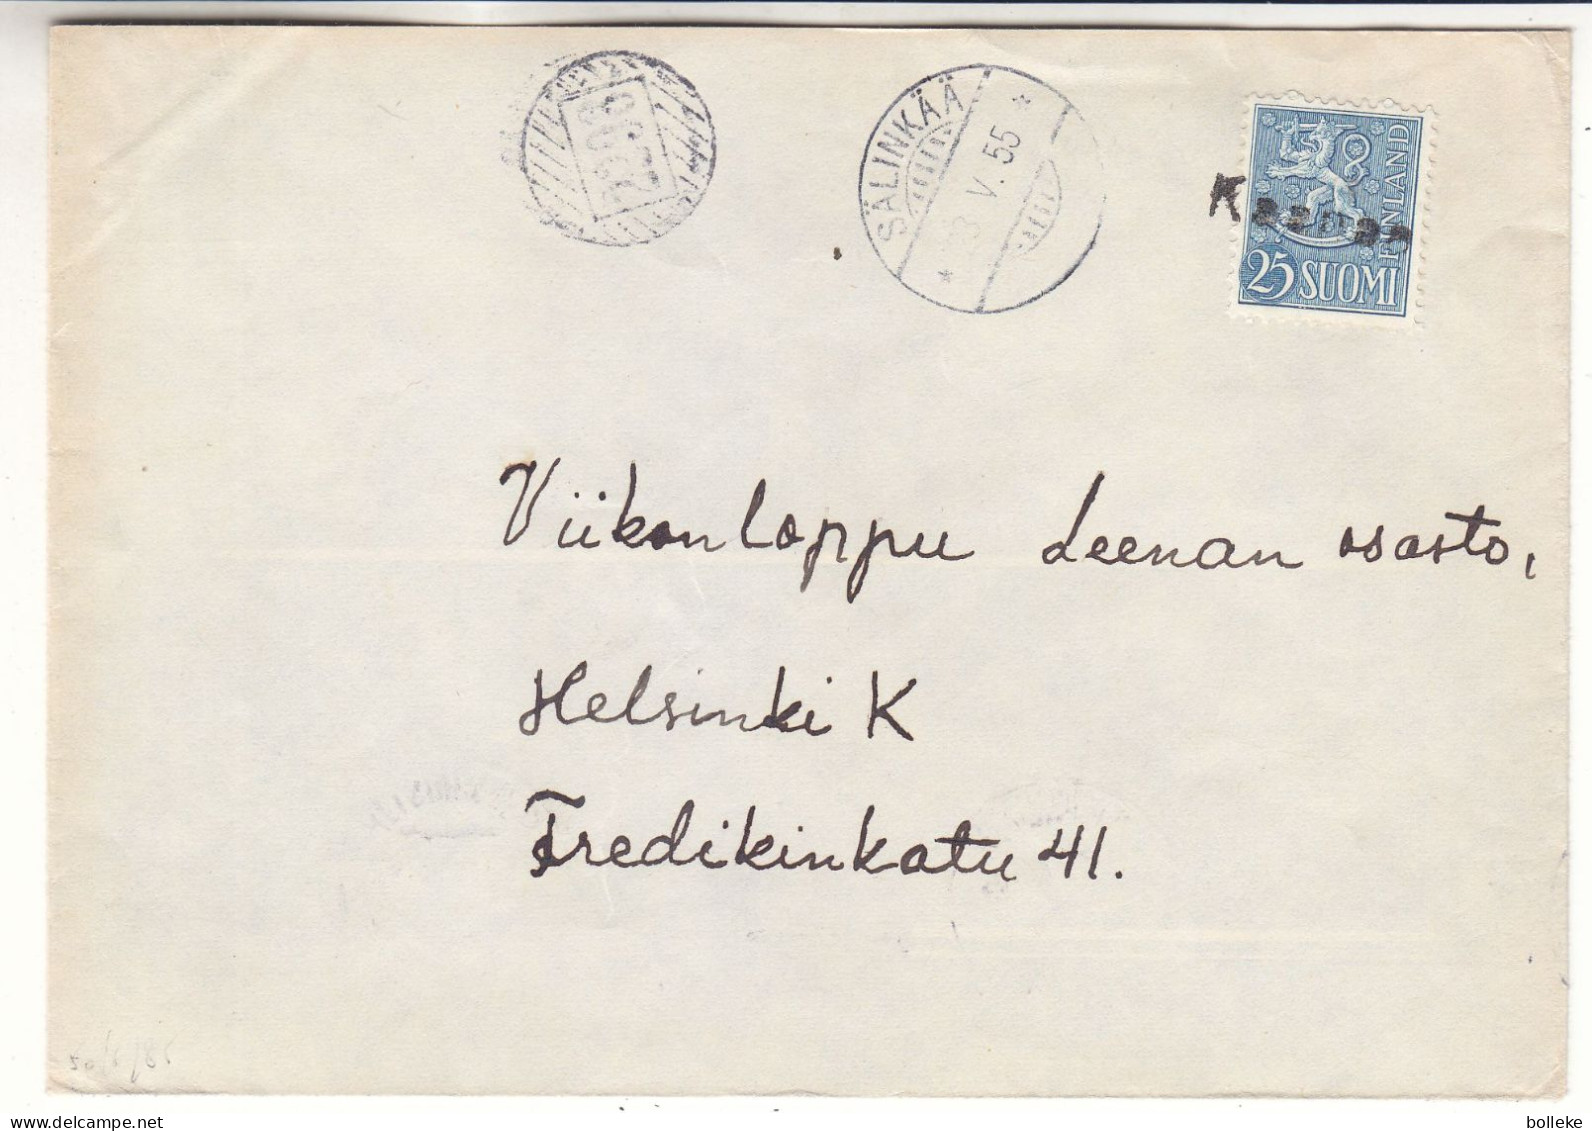 Finlande - Lettre De 1955 - Oblit Avec Griffe Kaanae  ? - Cachet De Sälinkää Et Mäntsälä - Avec Cachet Rural 2298  ? - Storia Postale